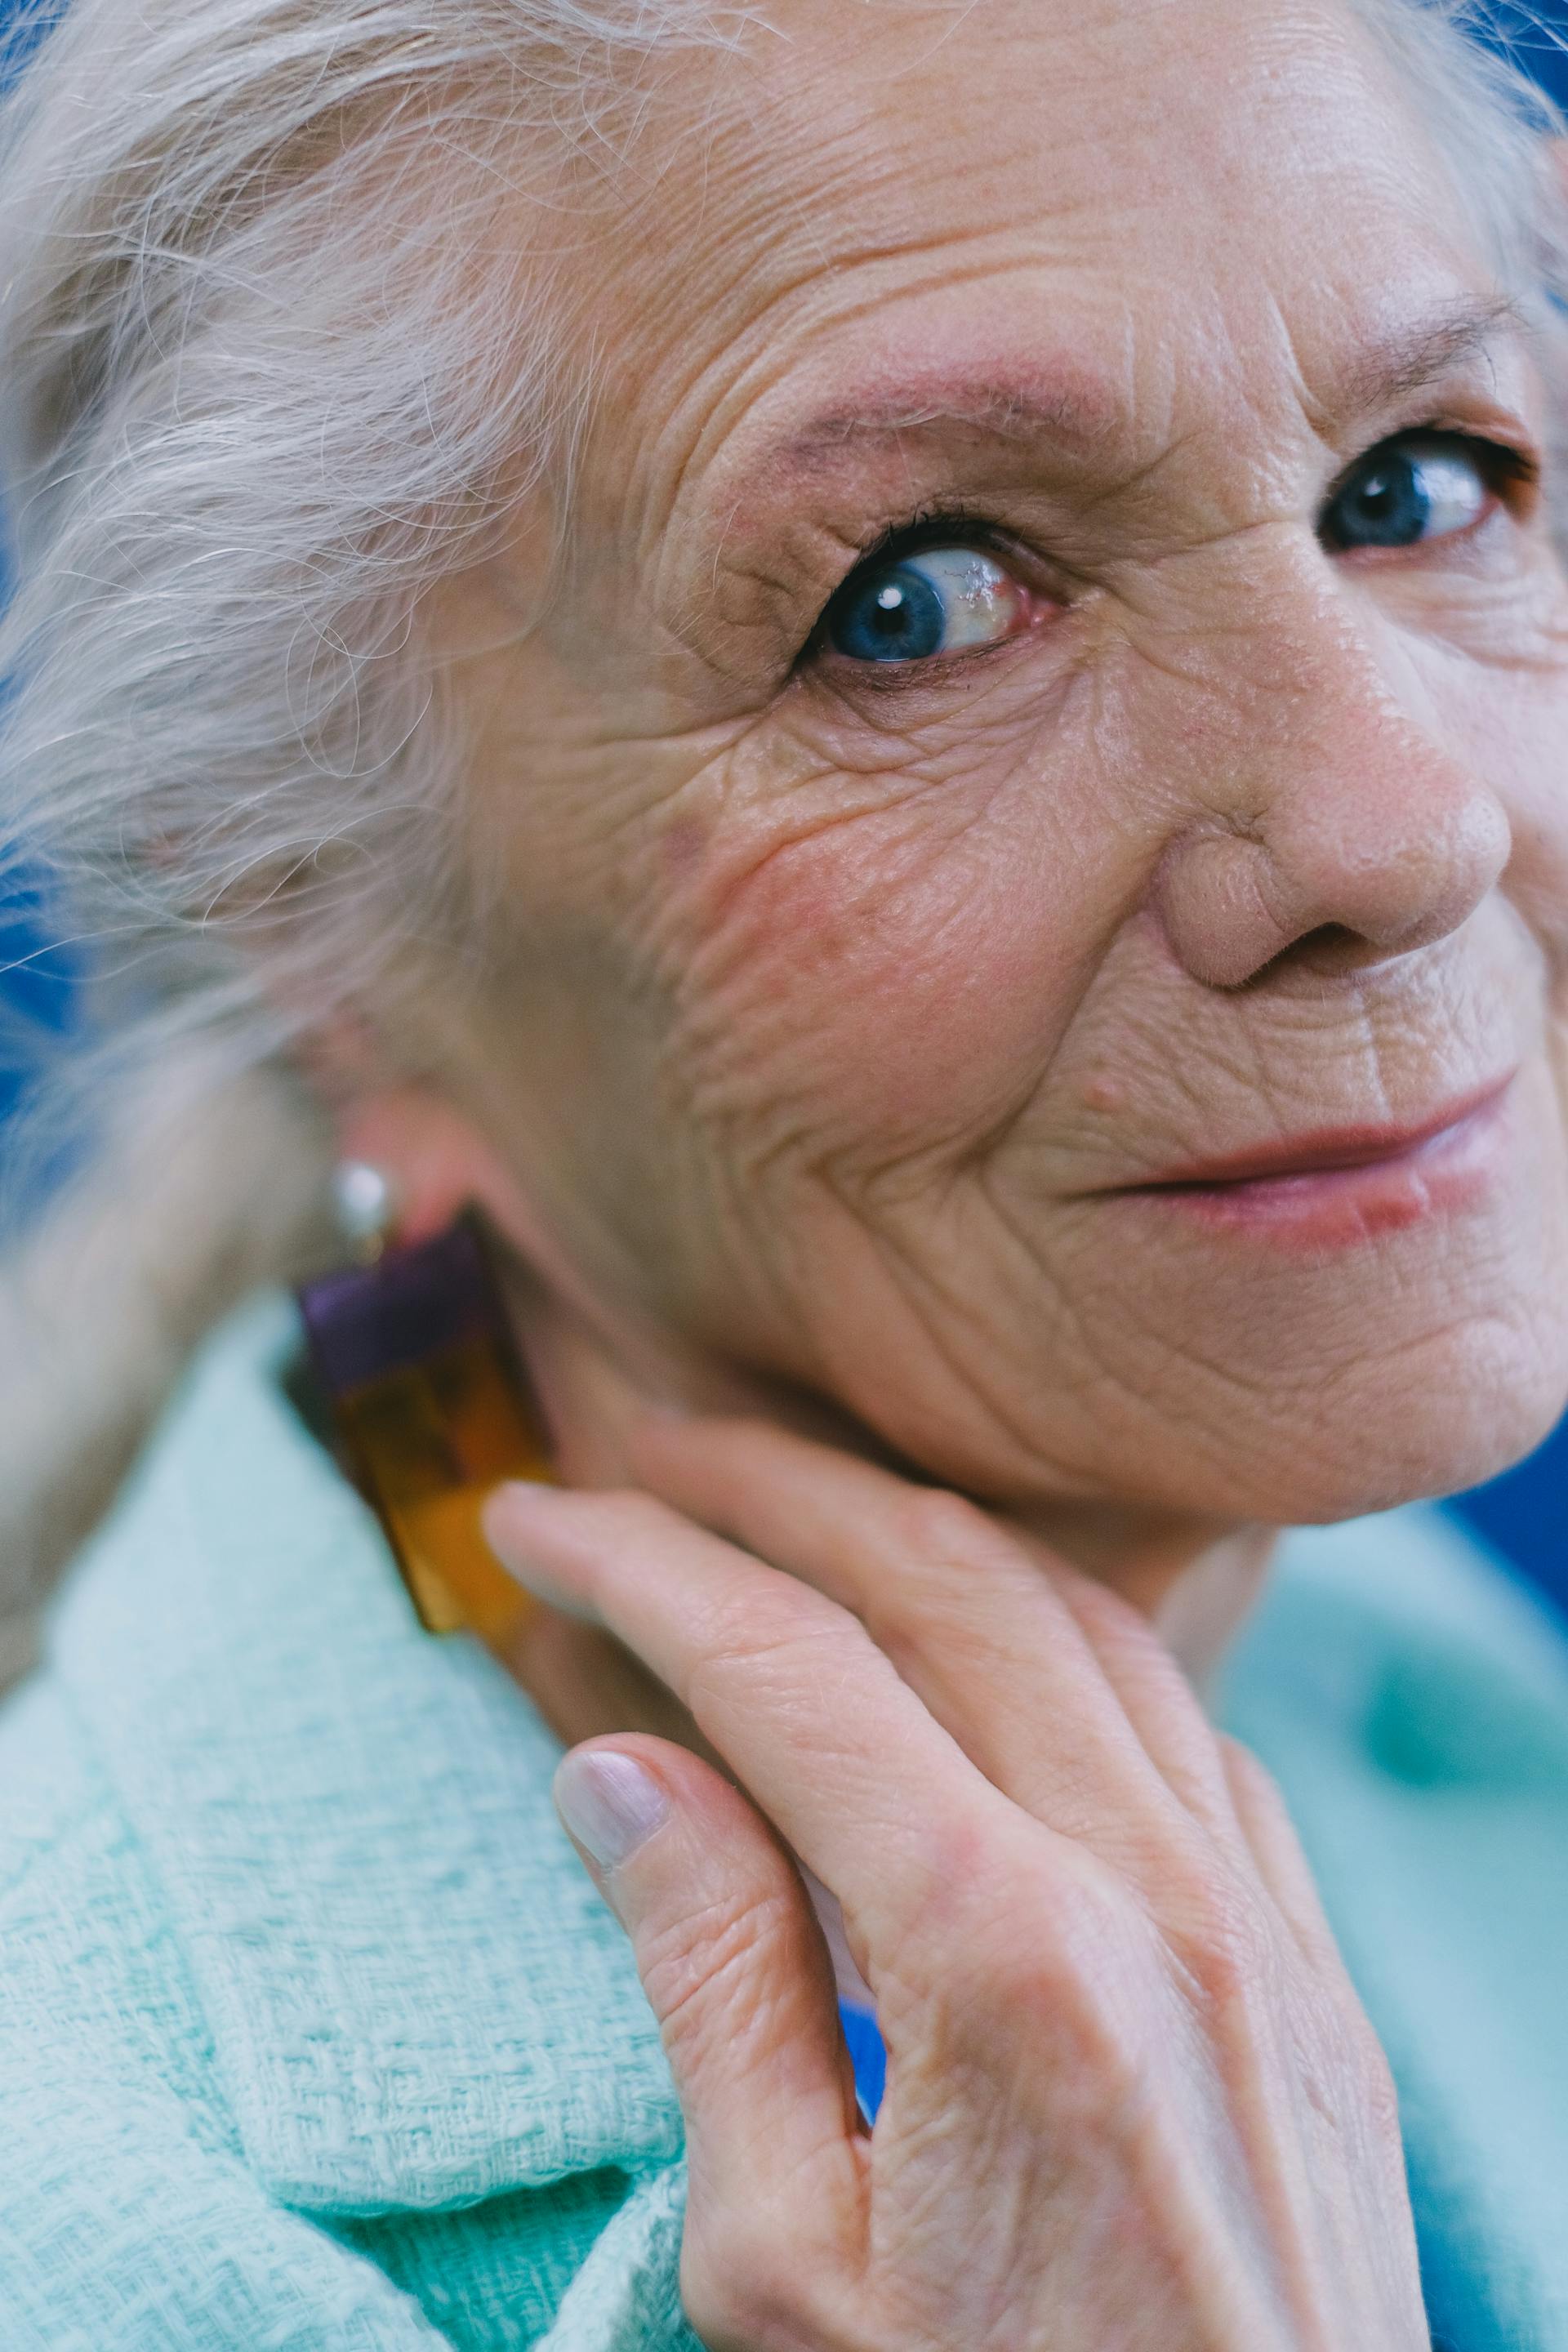 An older woman smiling | Source: Pexels